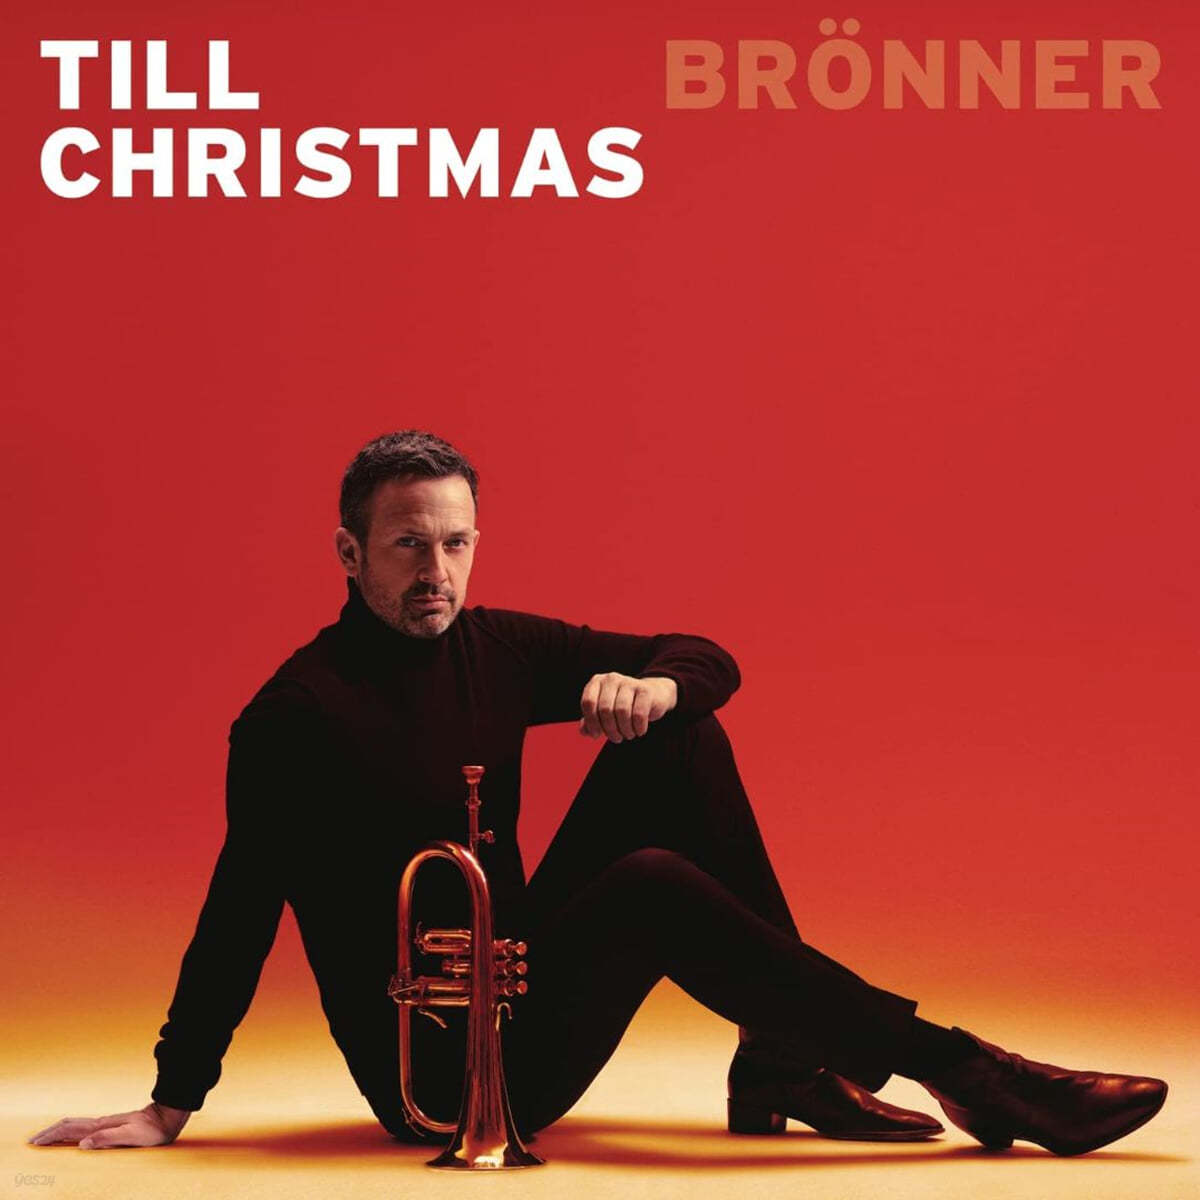 Till Bronner (틸 브로너) - The Christmas [LP]